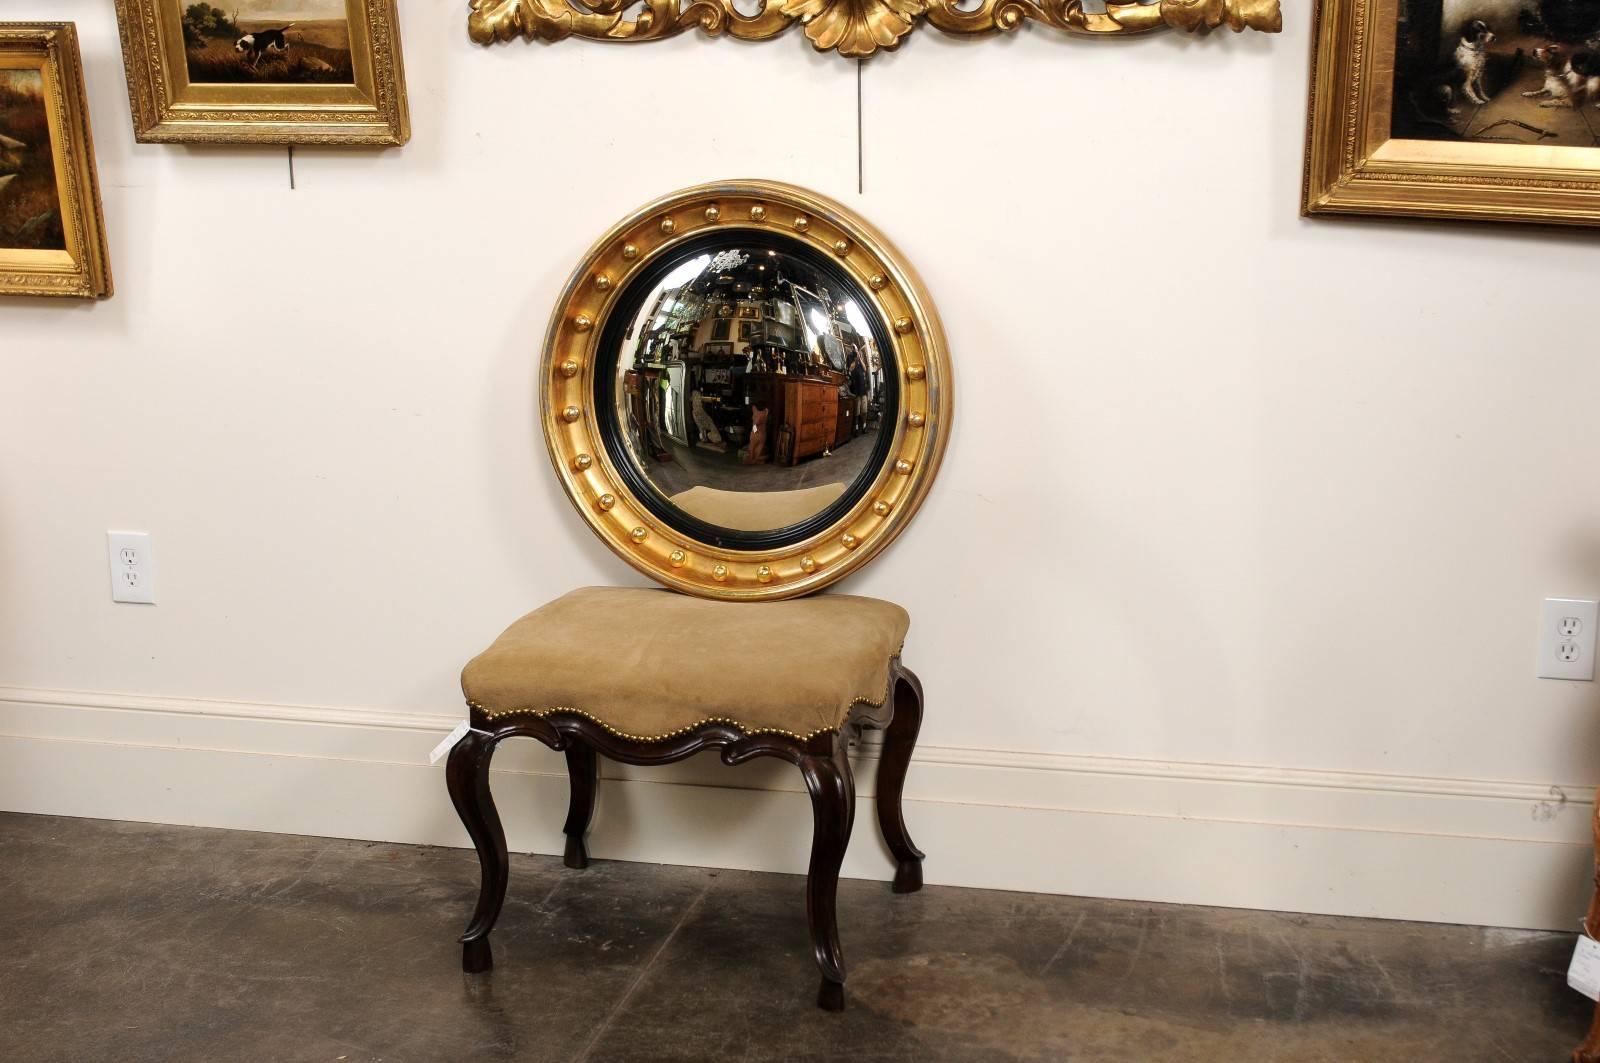 Ebonized English Giltwood Girandole Mirror with Convex Mirror from the Mid-19th Century